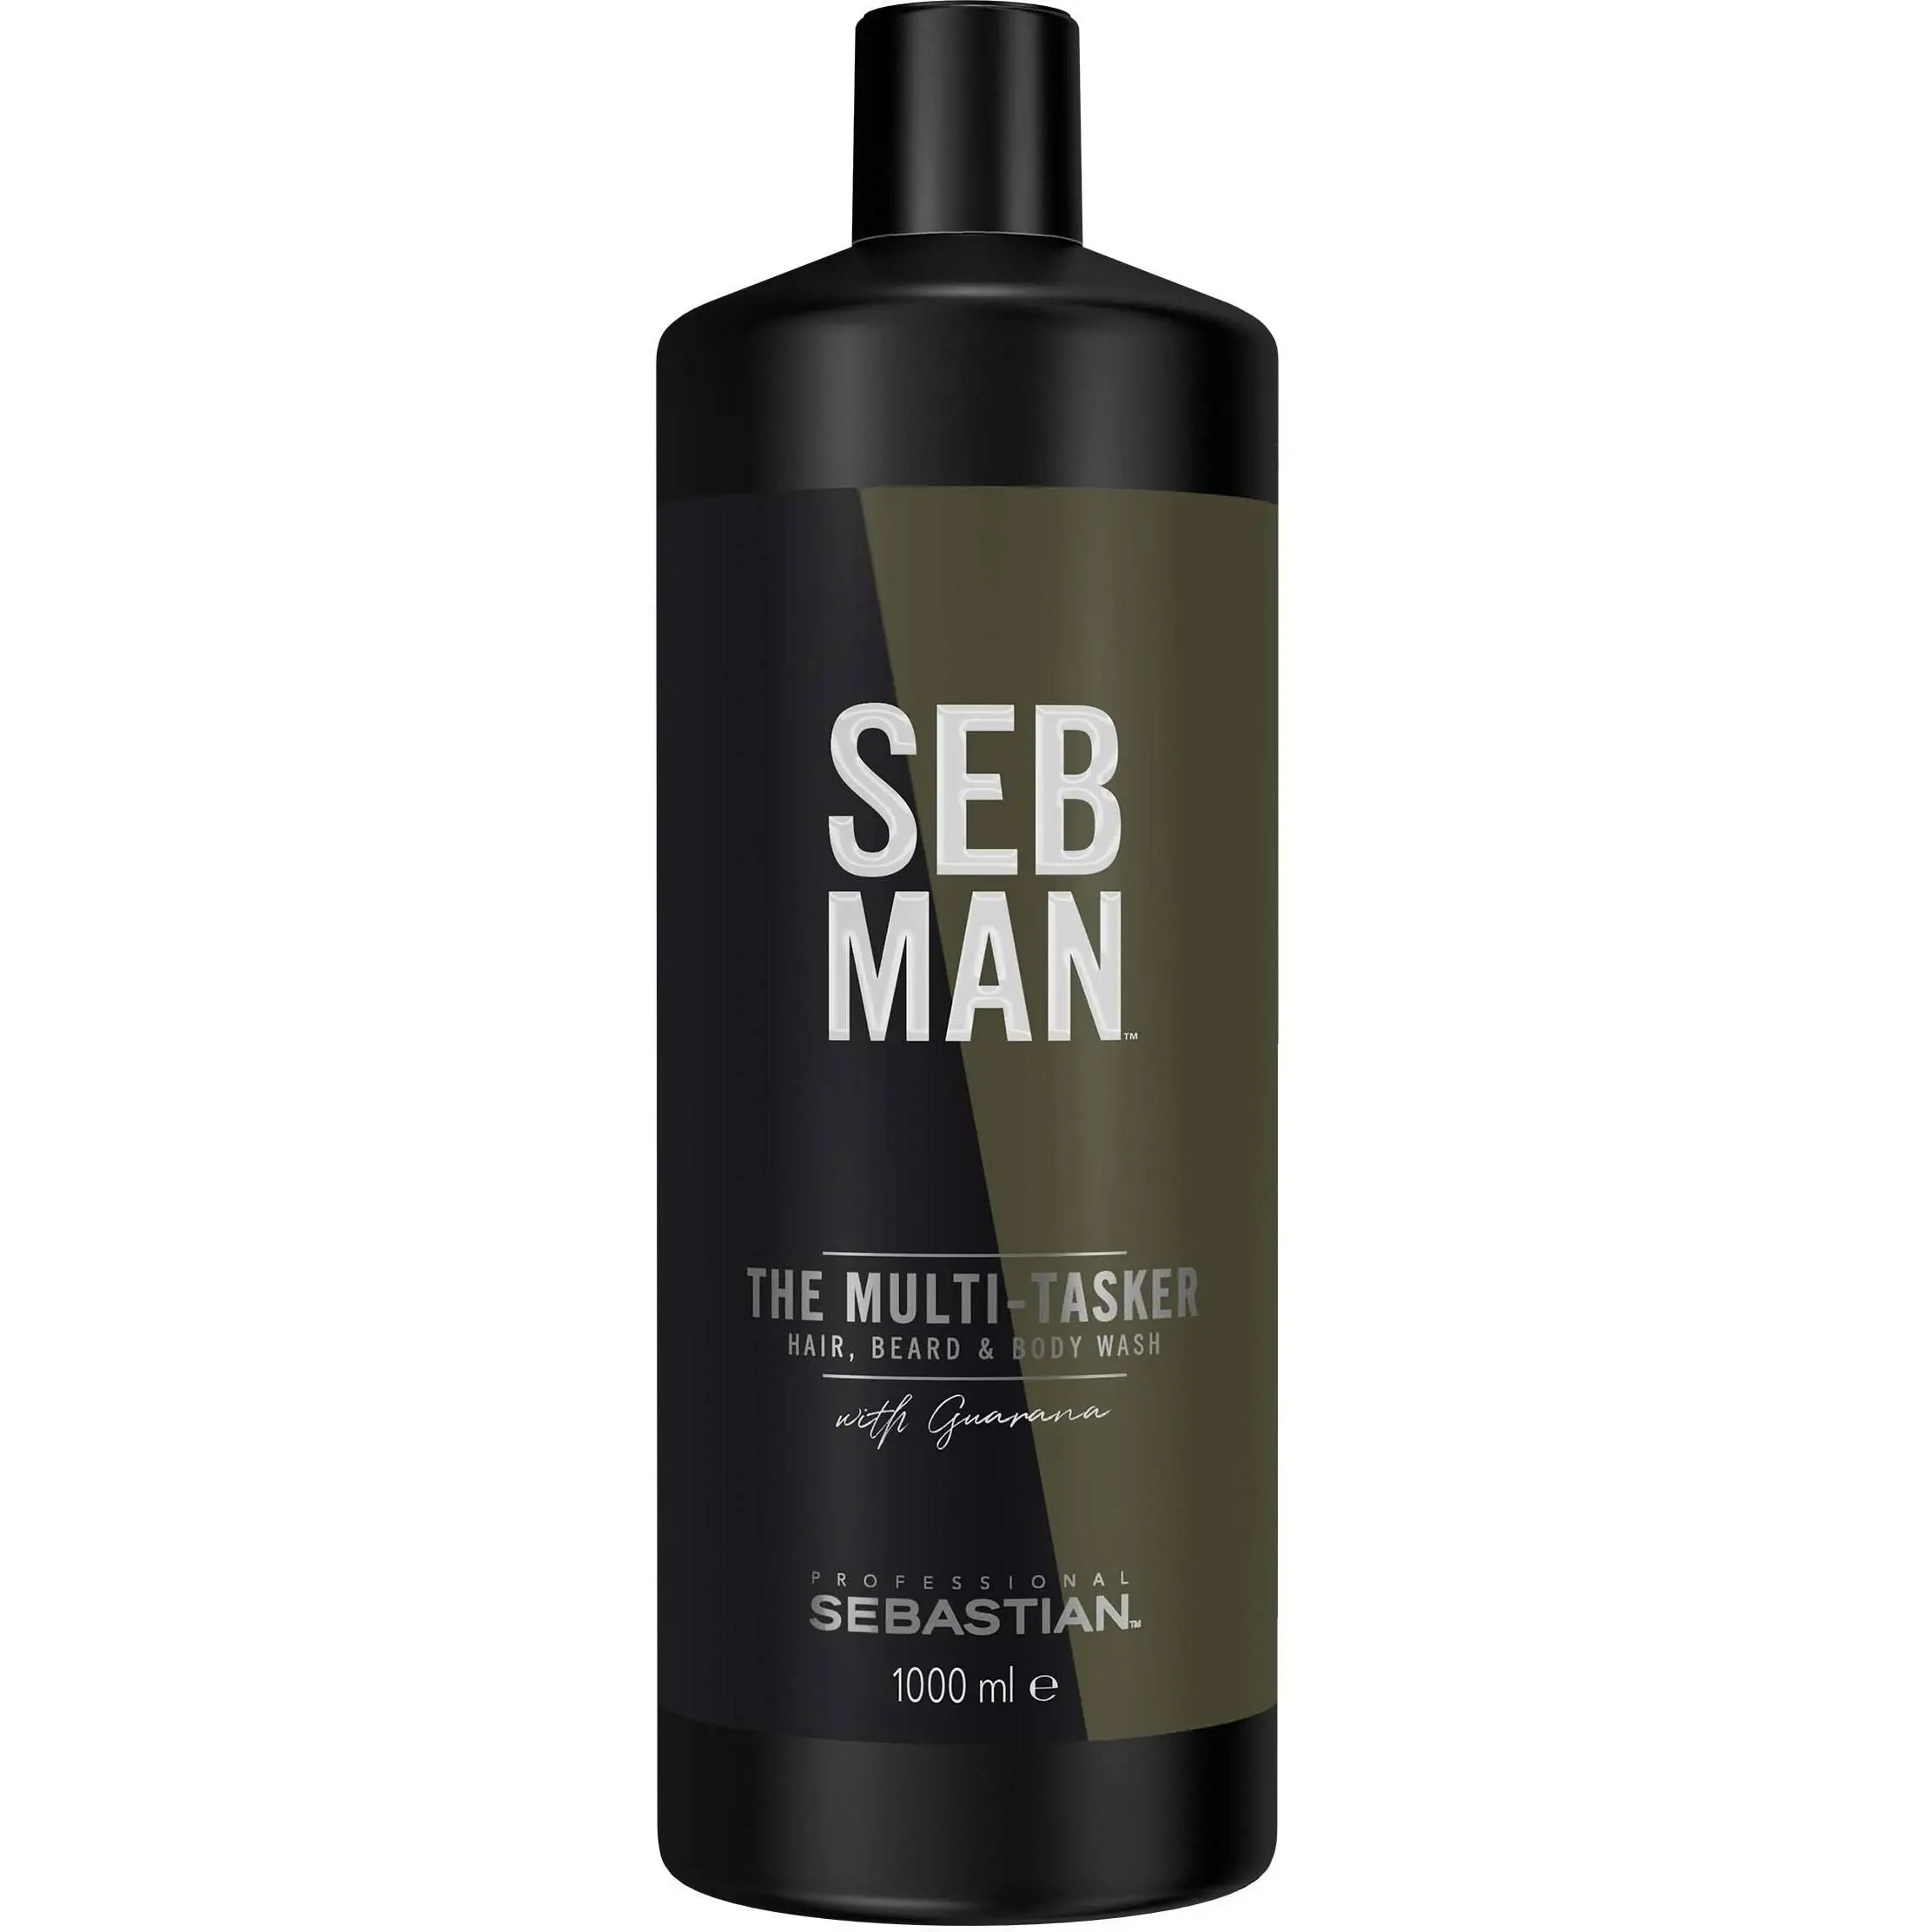 Seb Man The Multitasker Hair, Beard & Body Wash 1000ml Shampoo